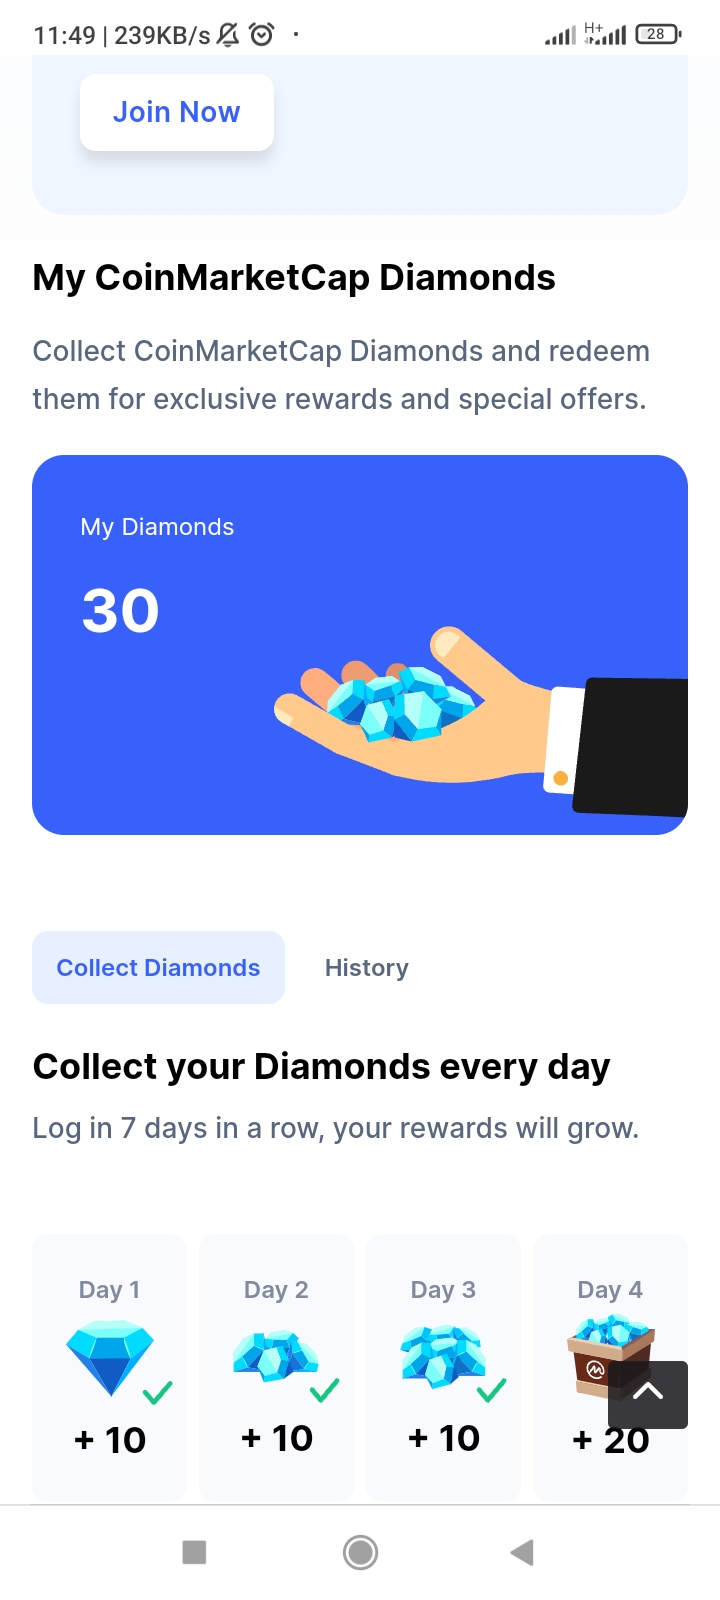 @temisaren/coin-market-cap-diamonds